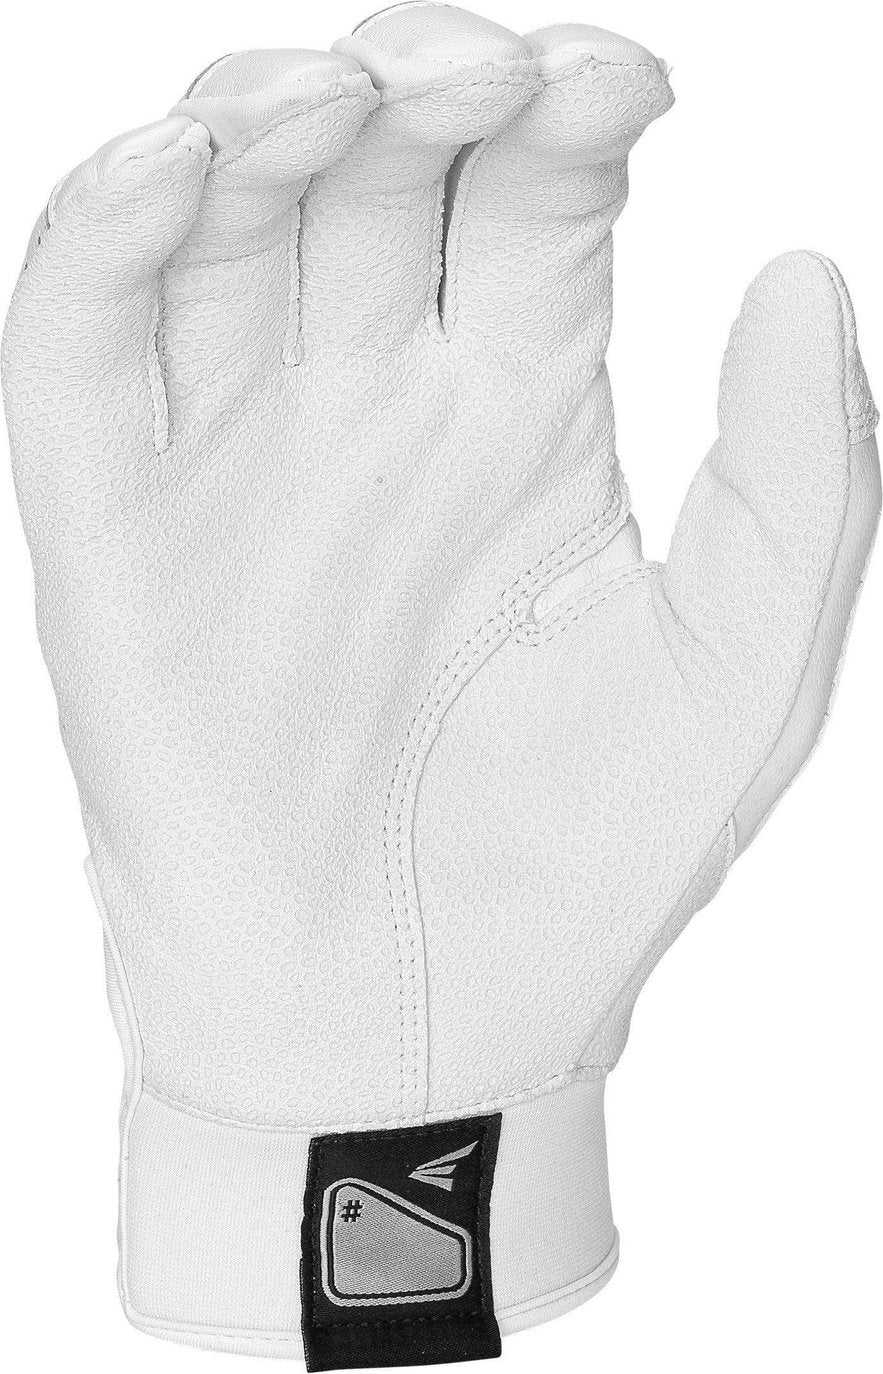 Easton Professional Collection Batting Gloves - White White - HIT a Double